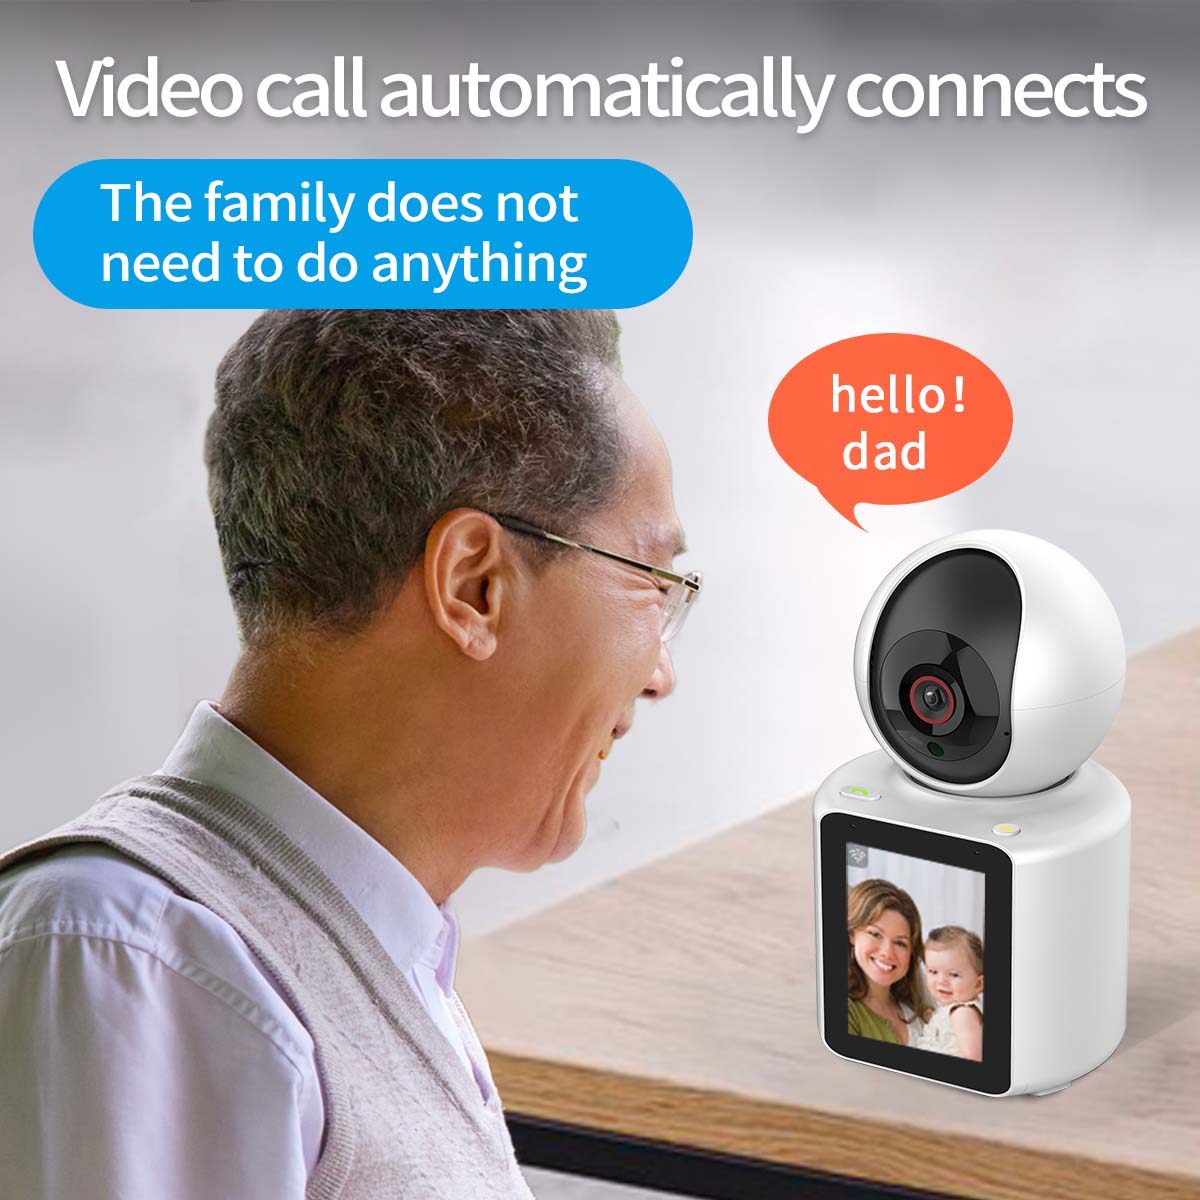 1080P Smart Network Security AI HD Wireless Camera Surveillance 2.8 Inch IPS Screen Baby Monitor Camera Wifi PTZ Camera | Electrr Inc